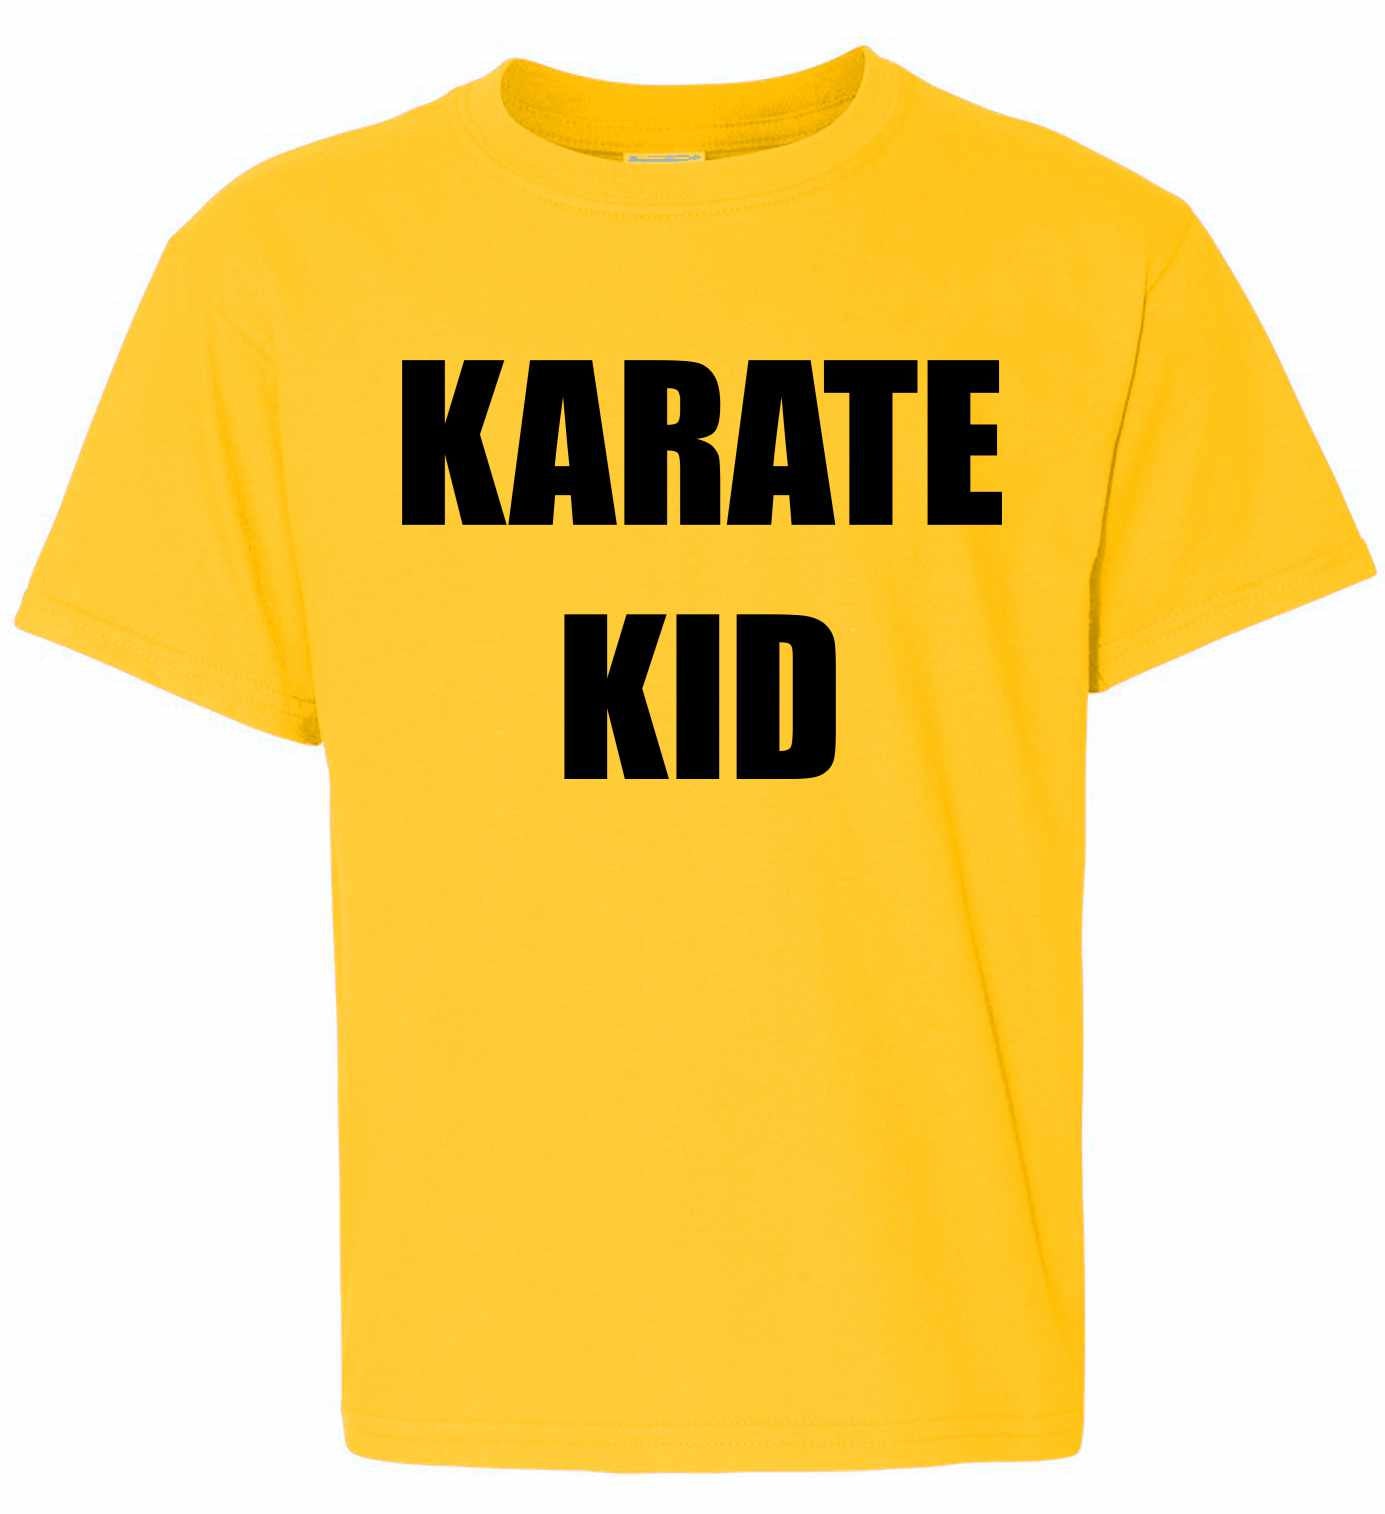 KARATE KID on Kids T-Shirt (#606-201)